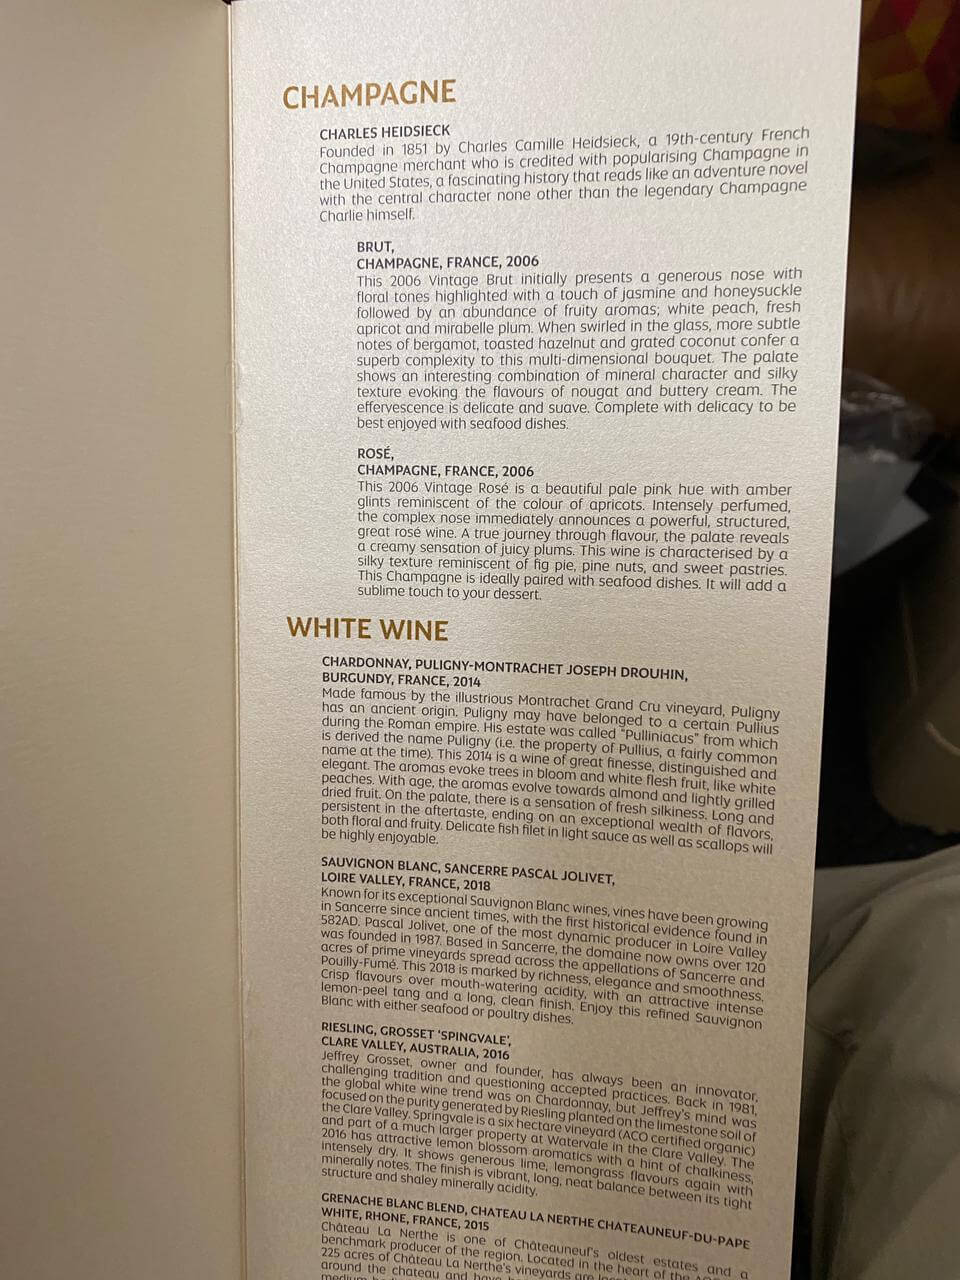 Etihad's First Class Wine list